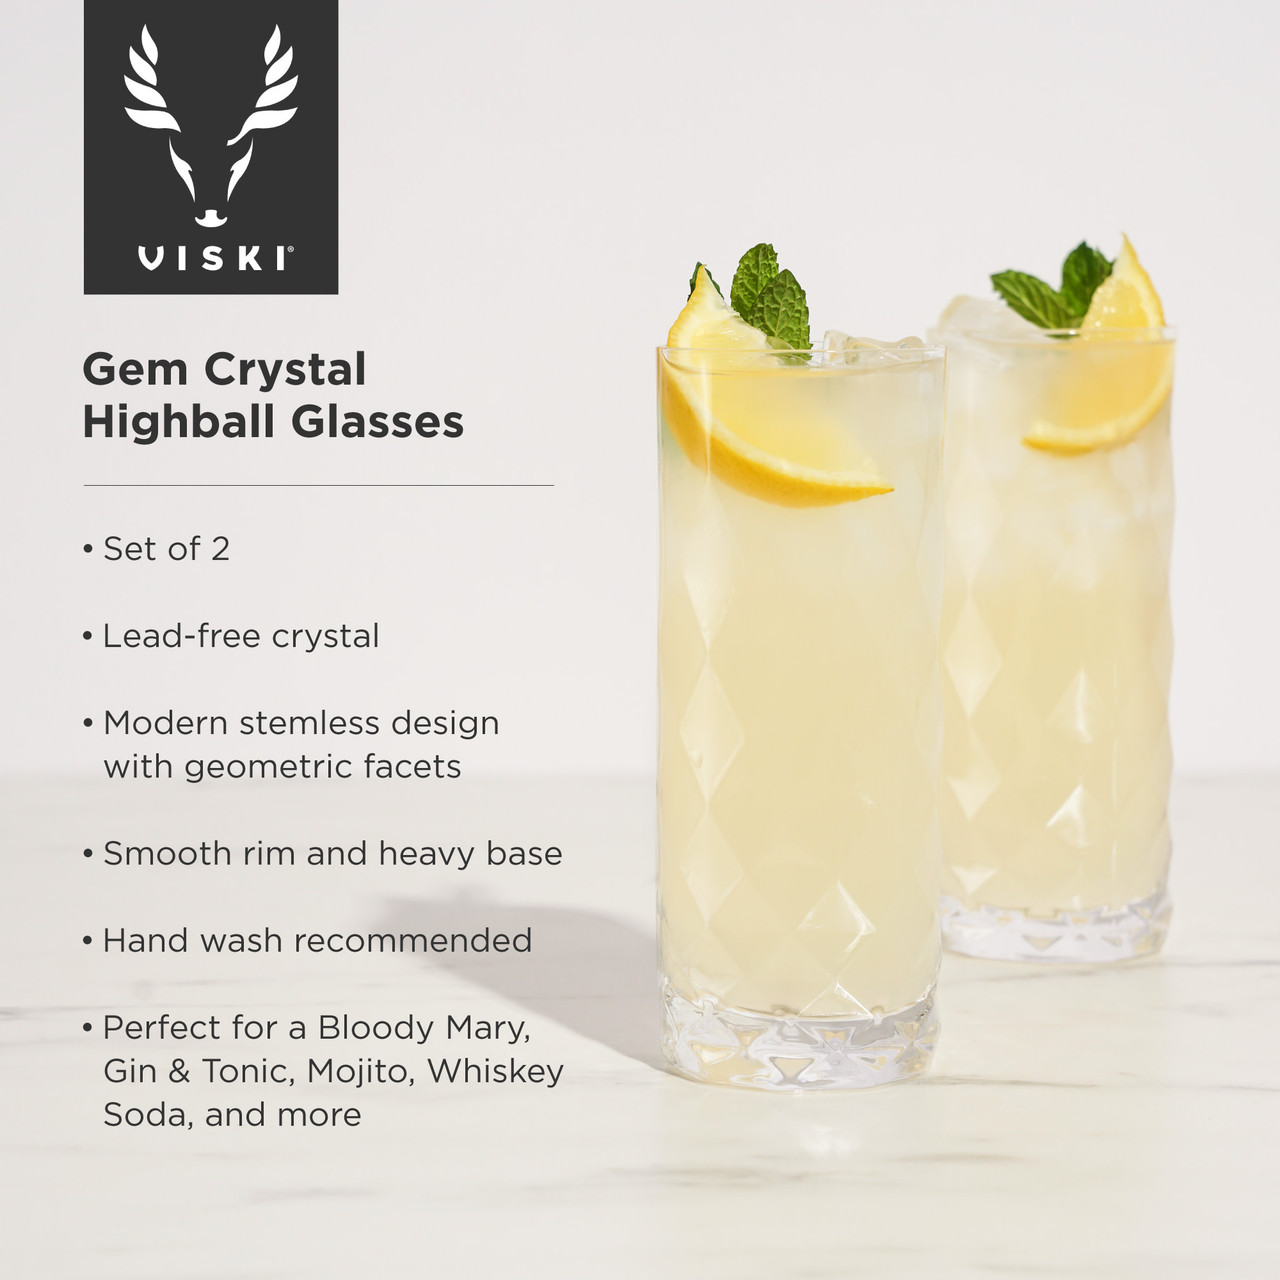 Gem Crystal Highball Glasses by Viski®